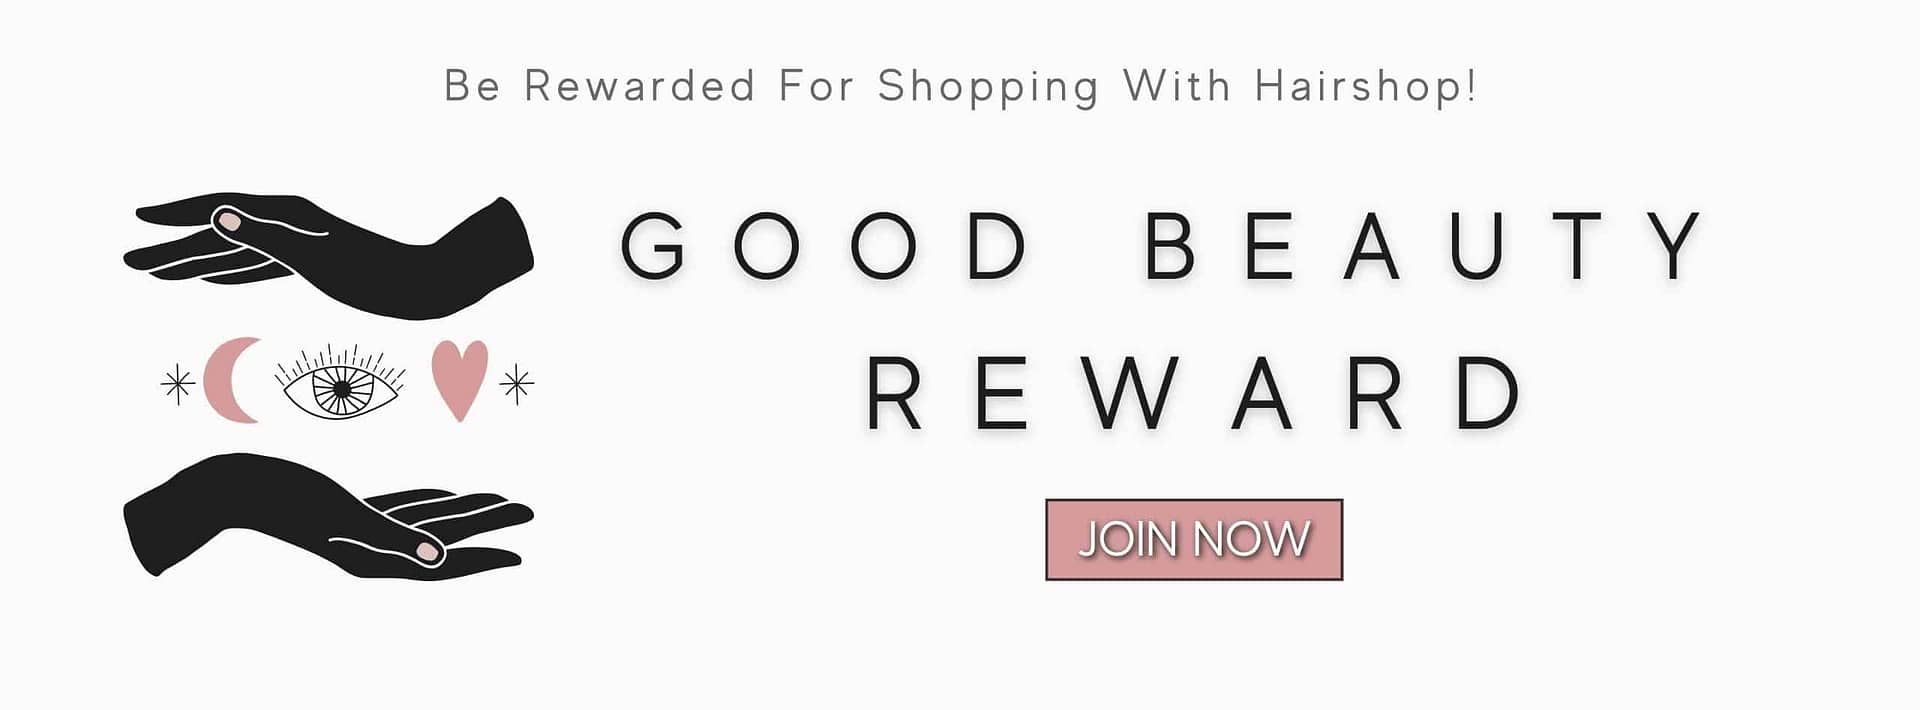 hairshop rewards